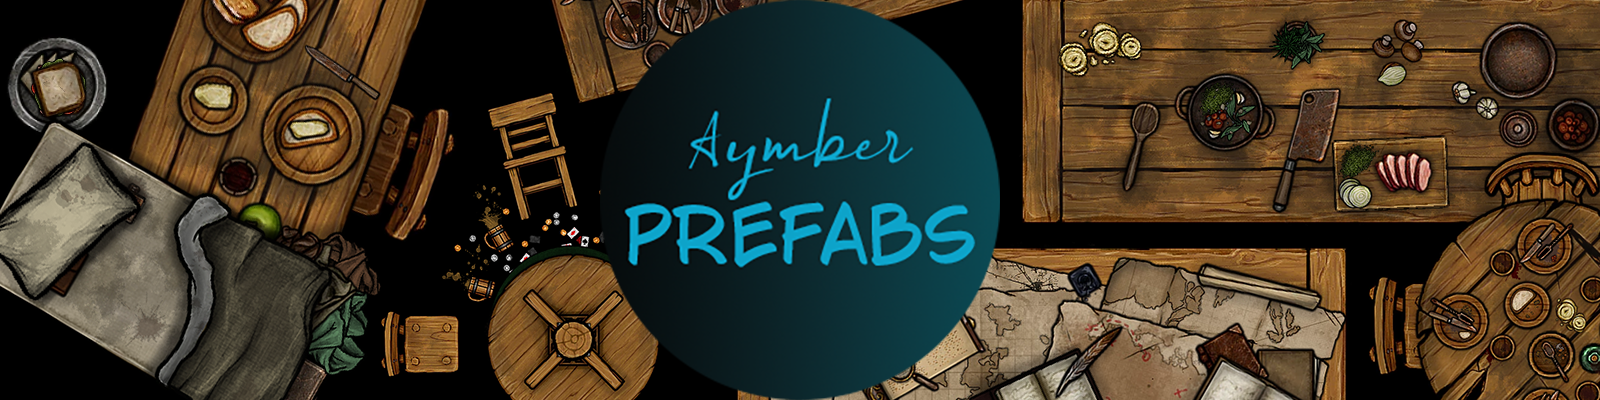 Aymber Prefabs